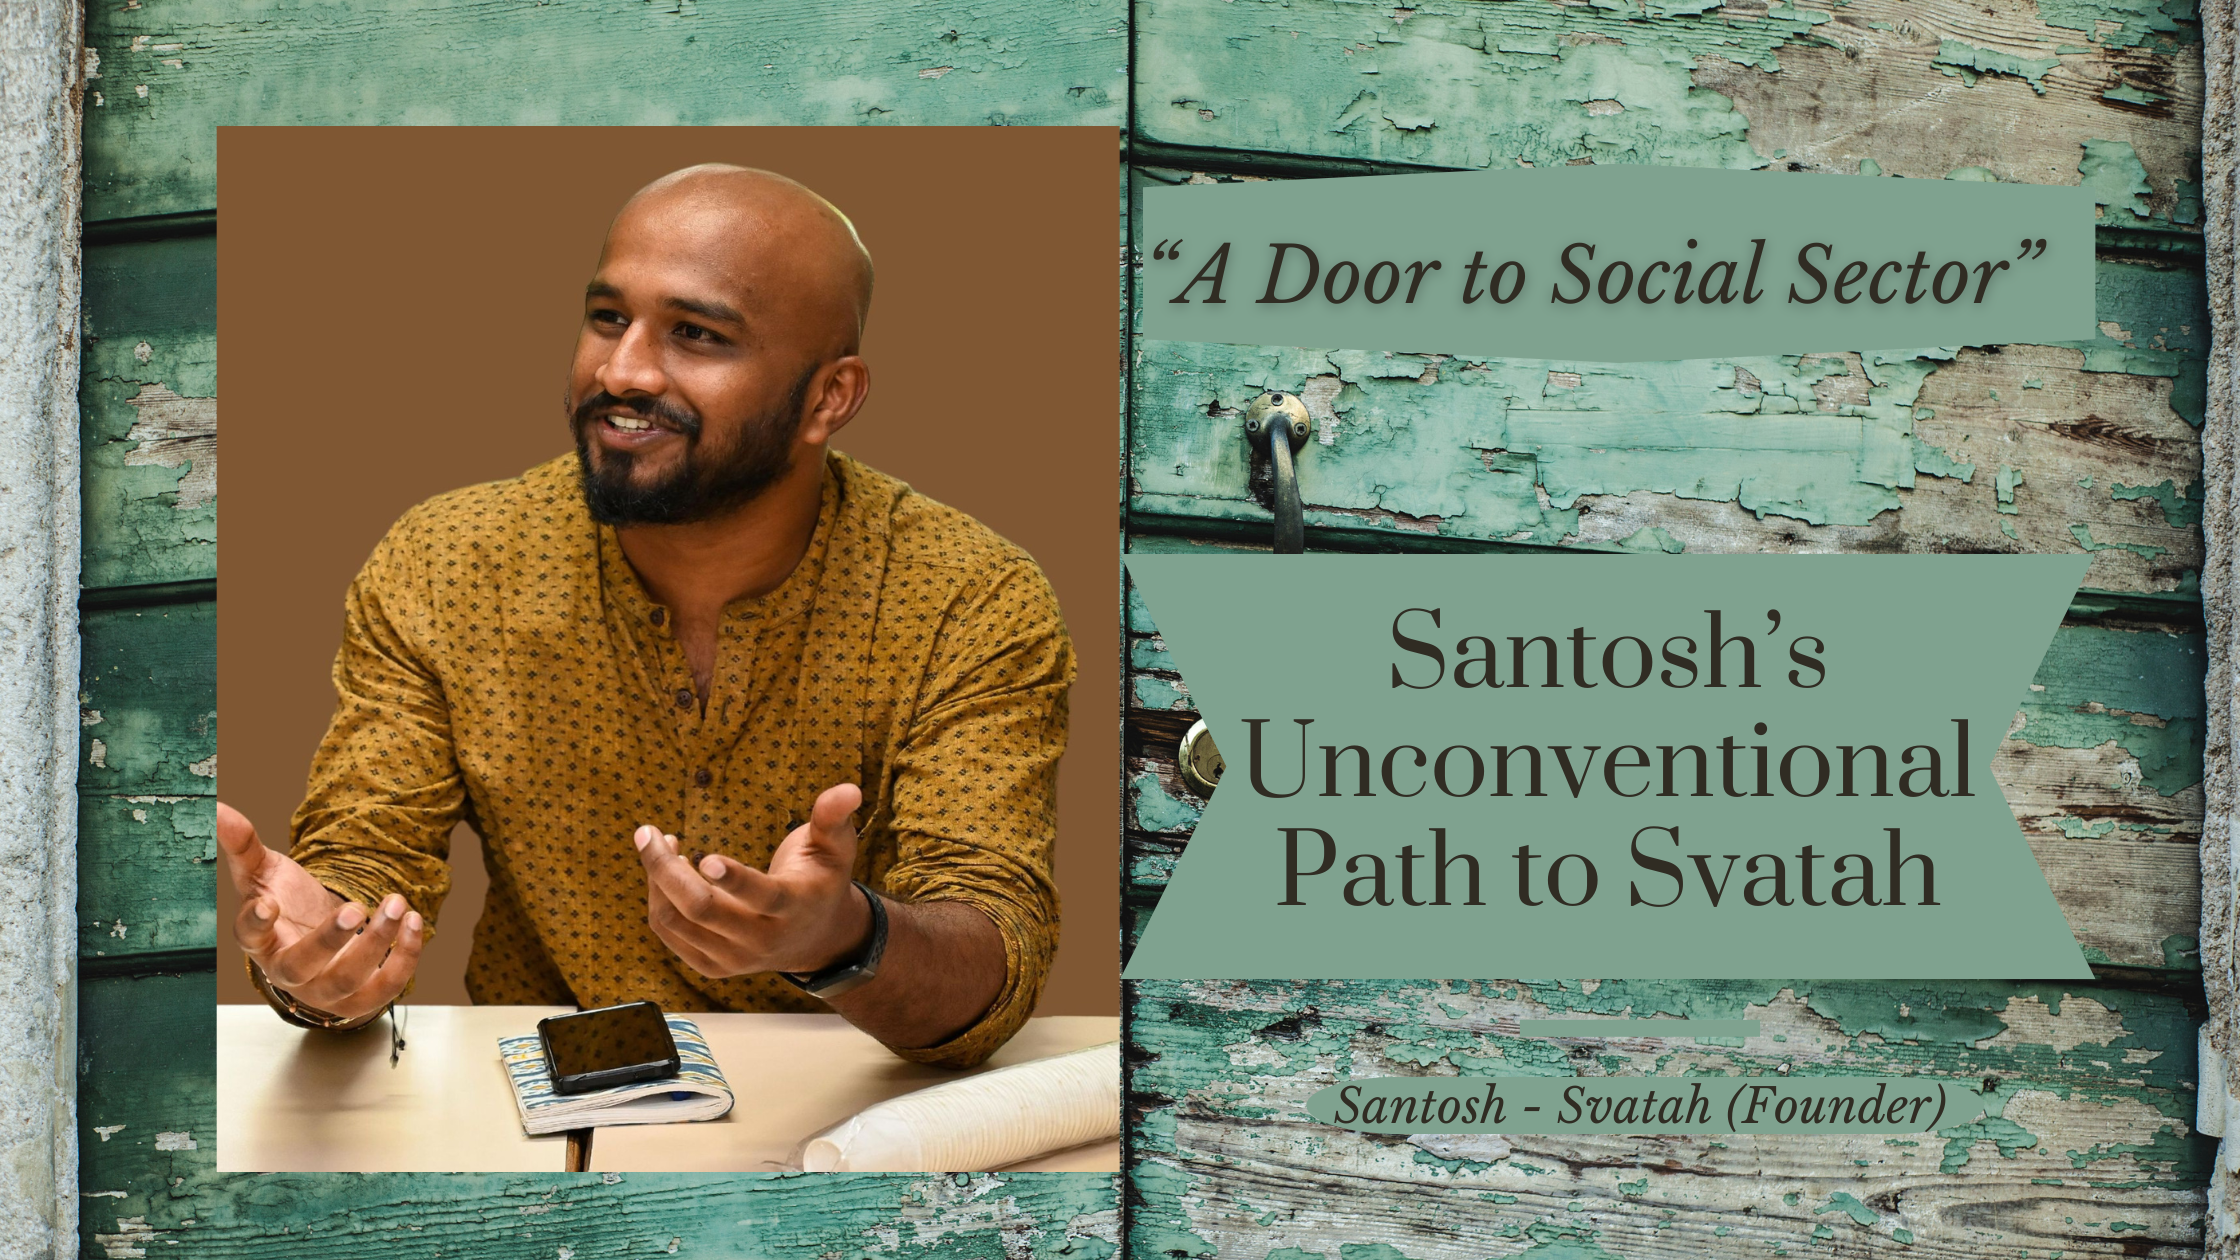 Santosh’s Unconventional Path to Svatah